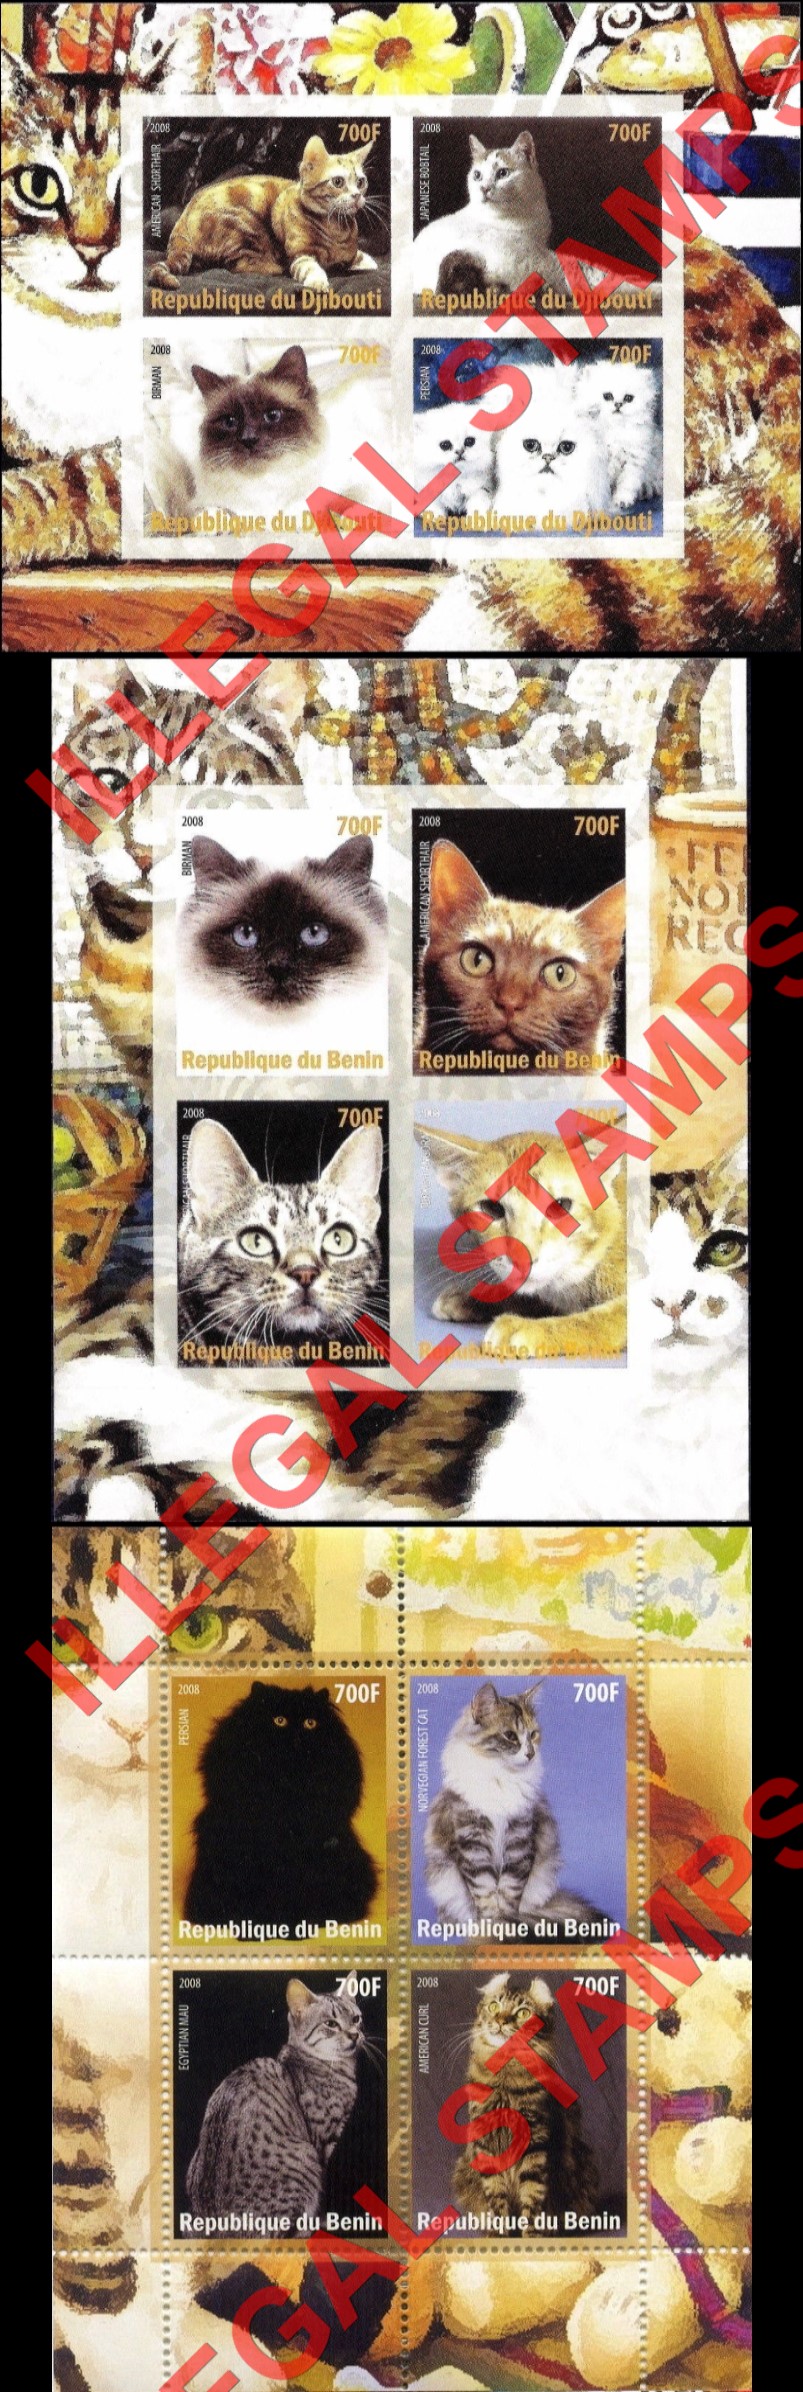 Benin 2008 Cats Illegal Stamp Souvenir Sheets of 4